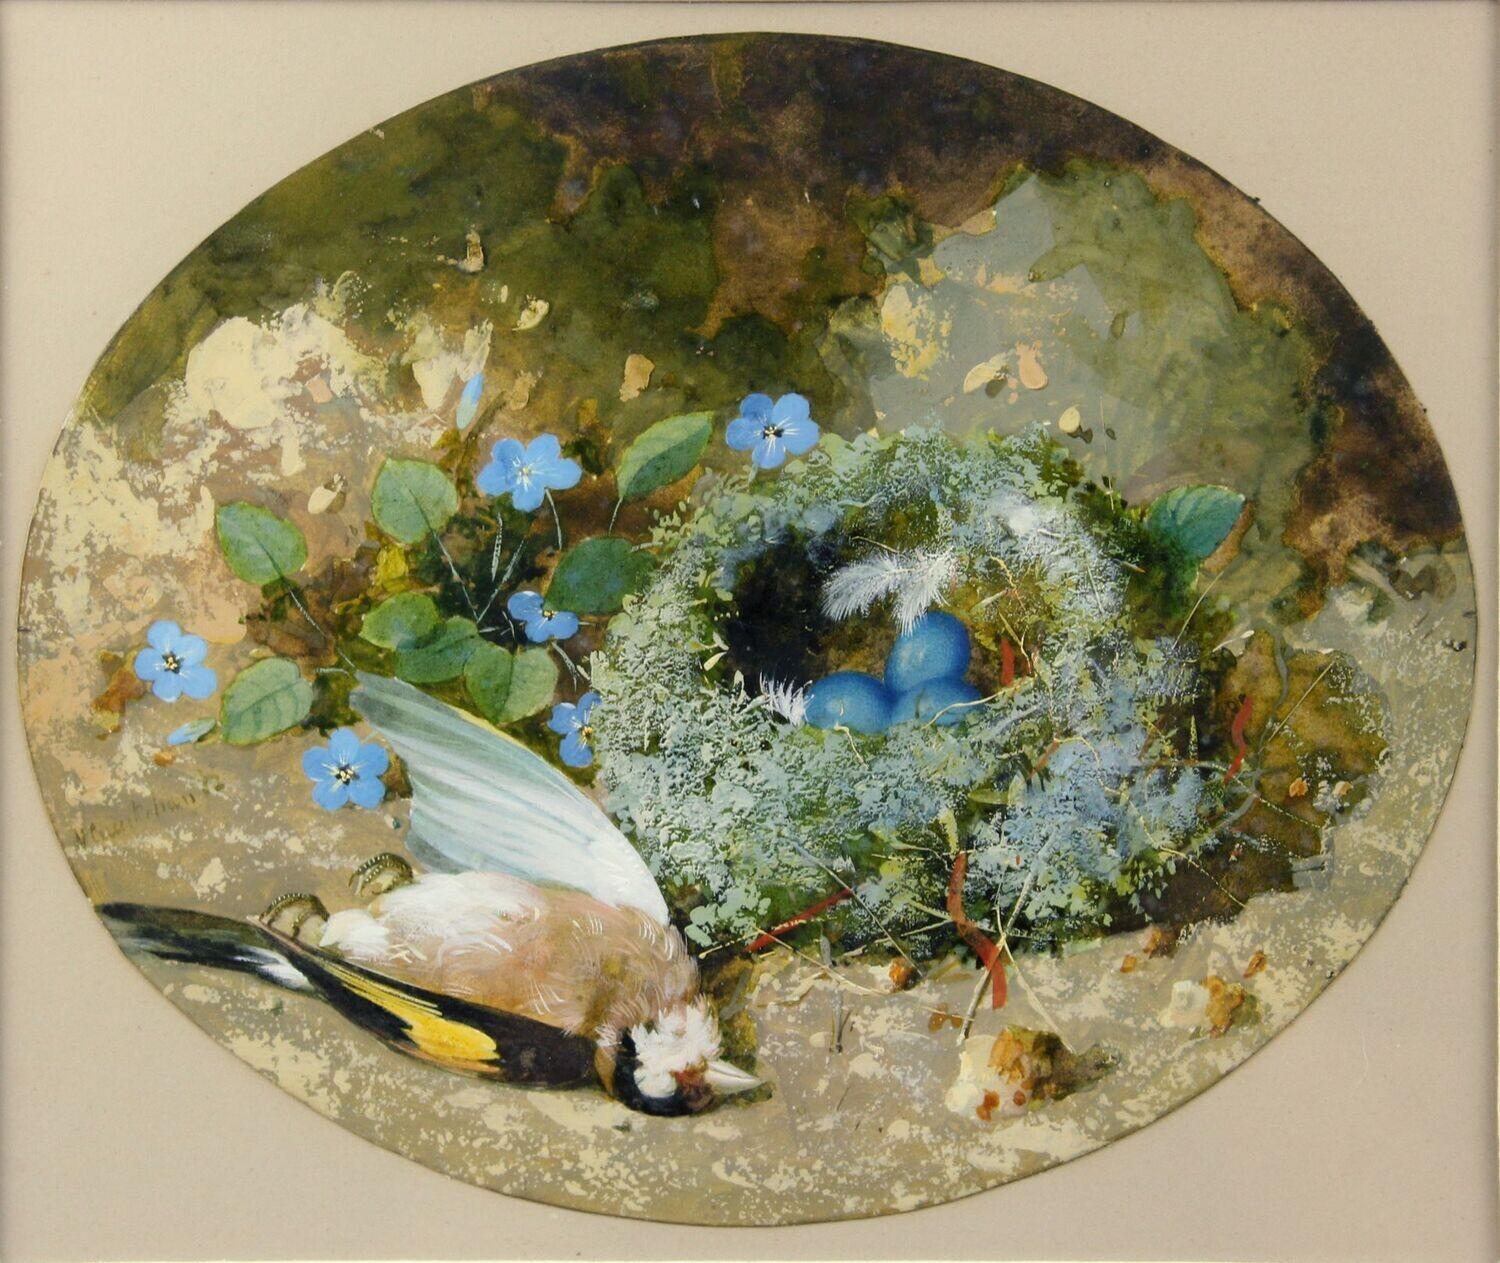 William Cruickshank Animal Art - Still life with dead goldfinch - The mystic blue transcends death -